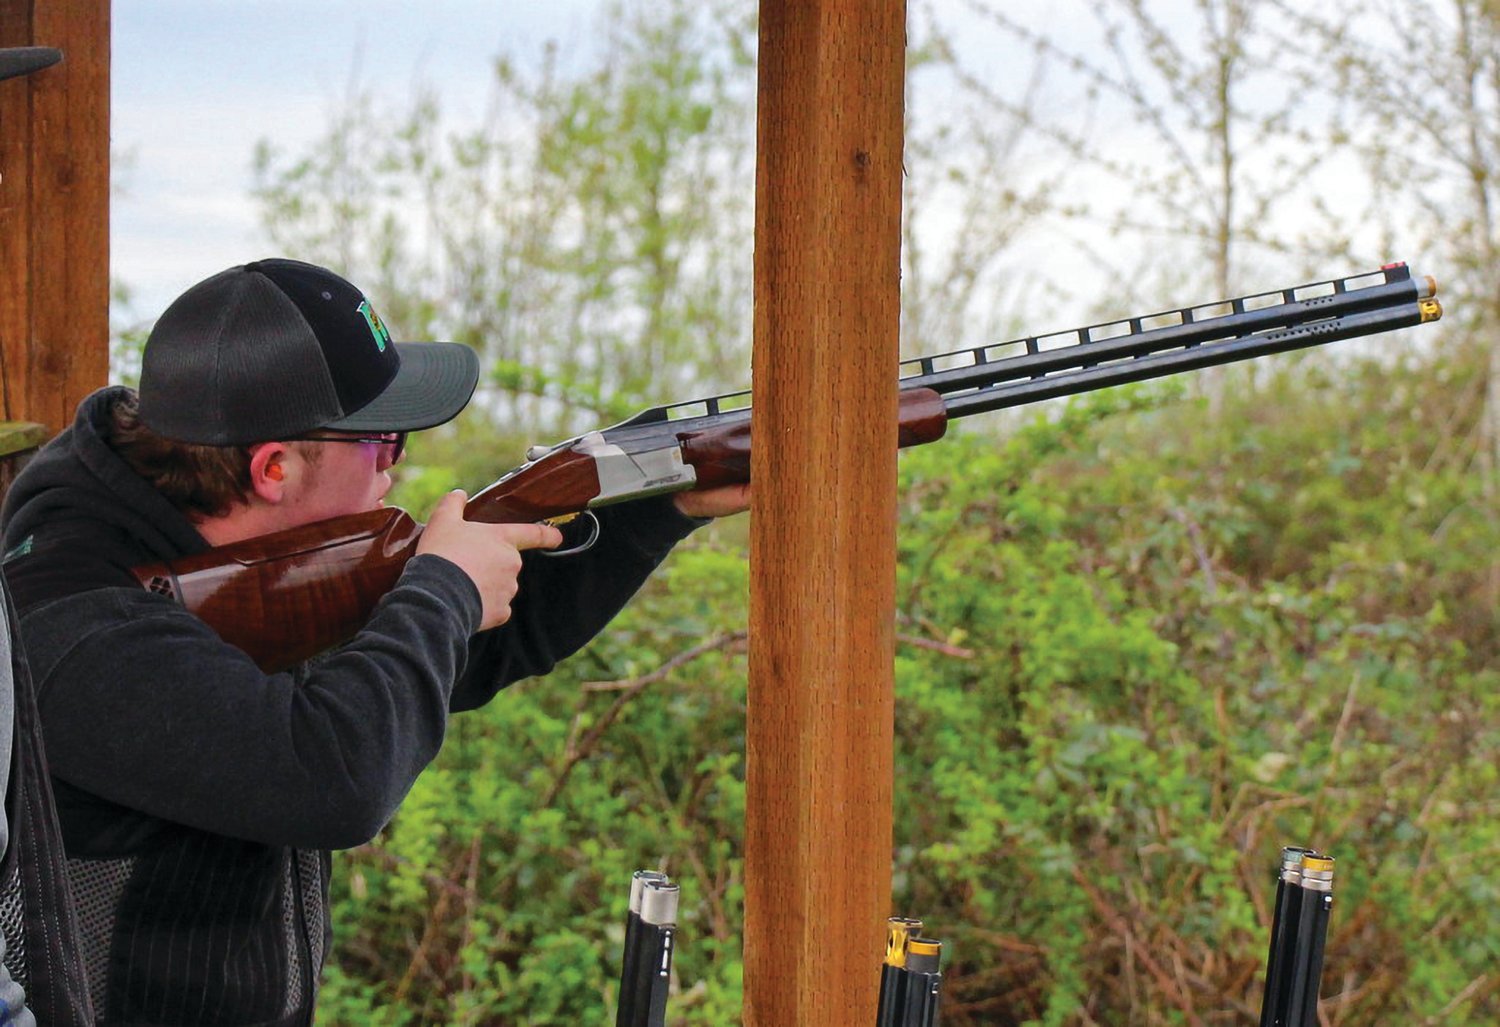 Dane Hauge shoots an over-under shotgun at a range.